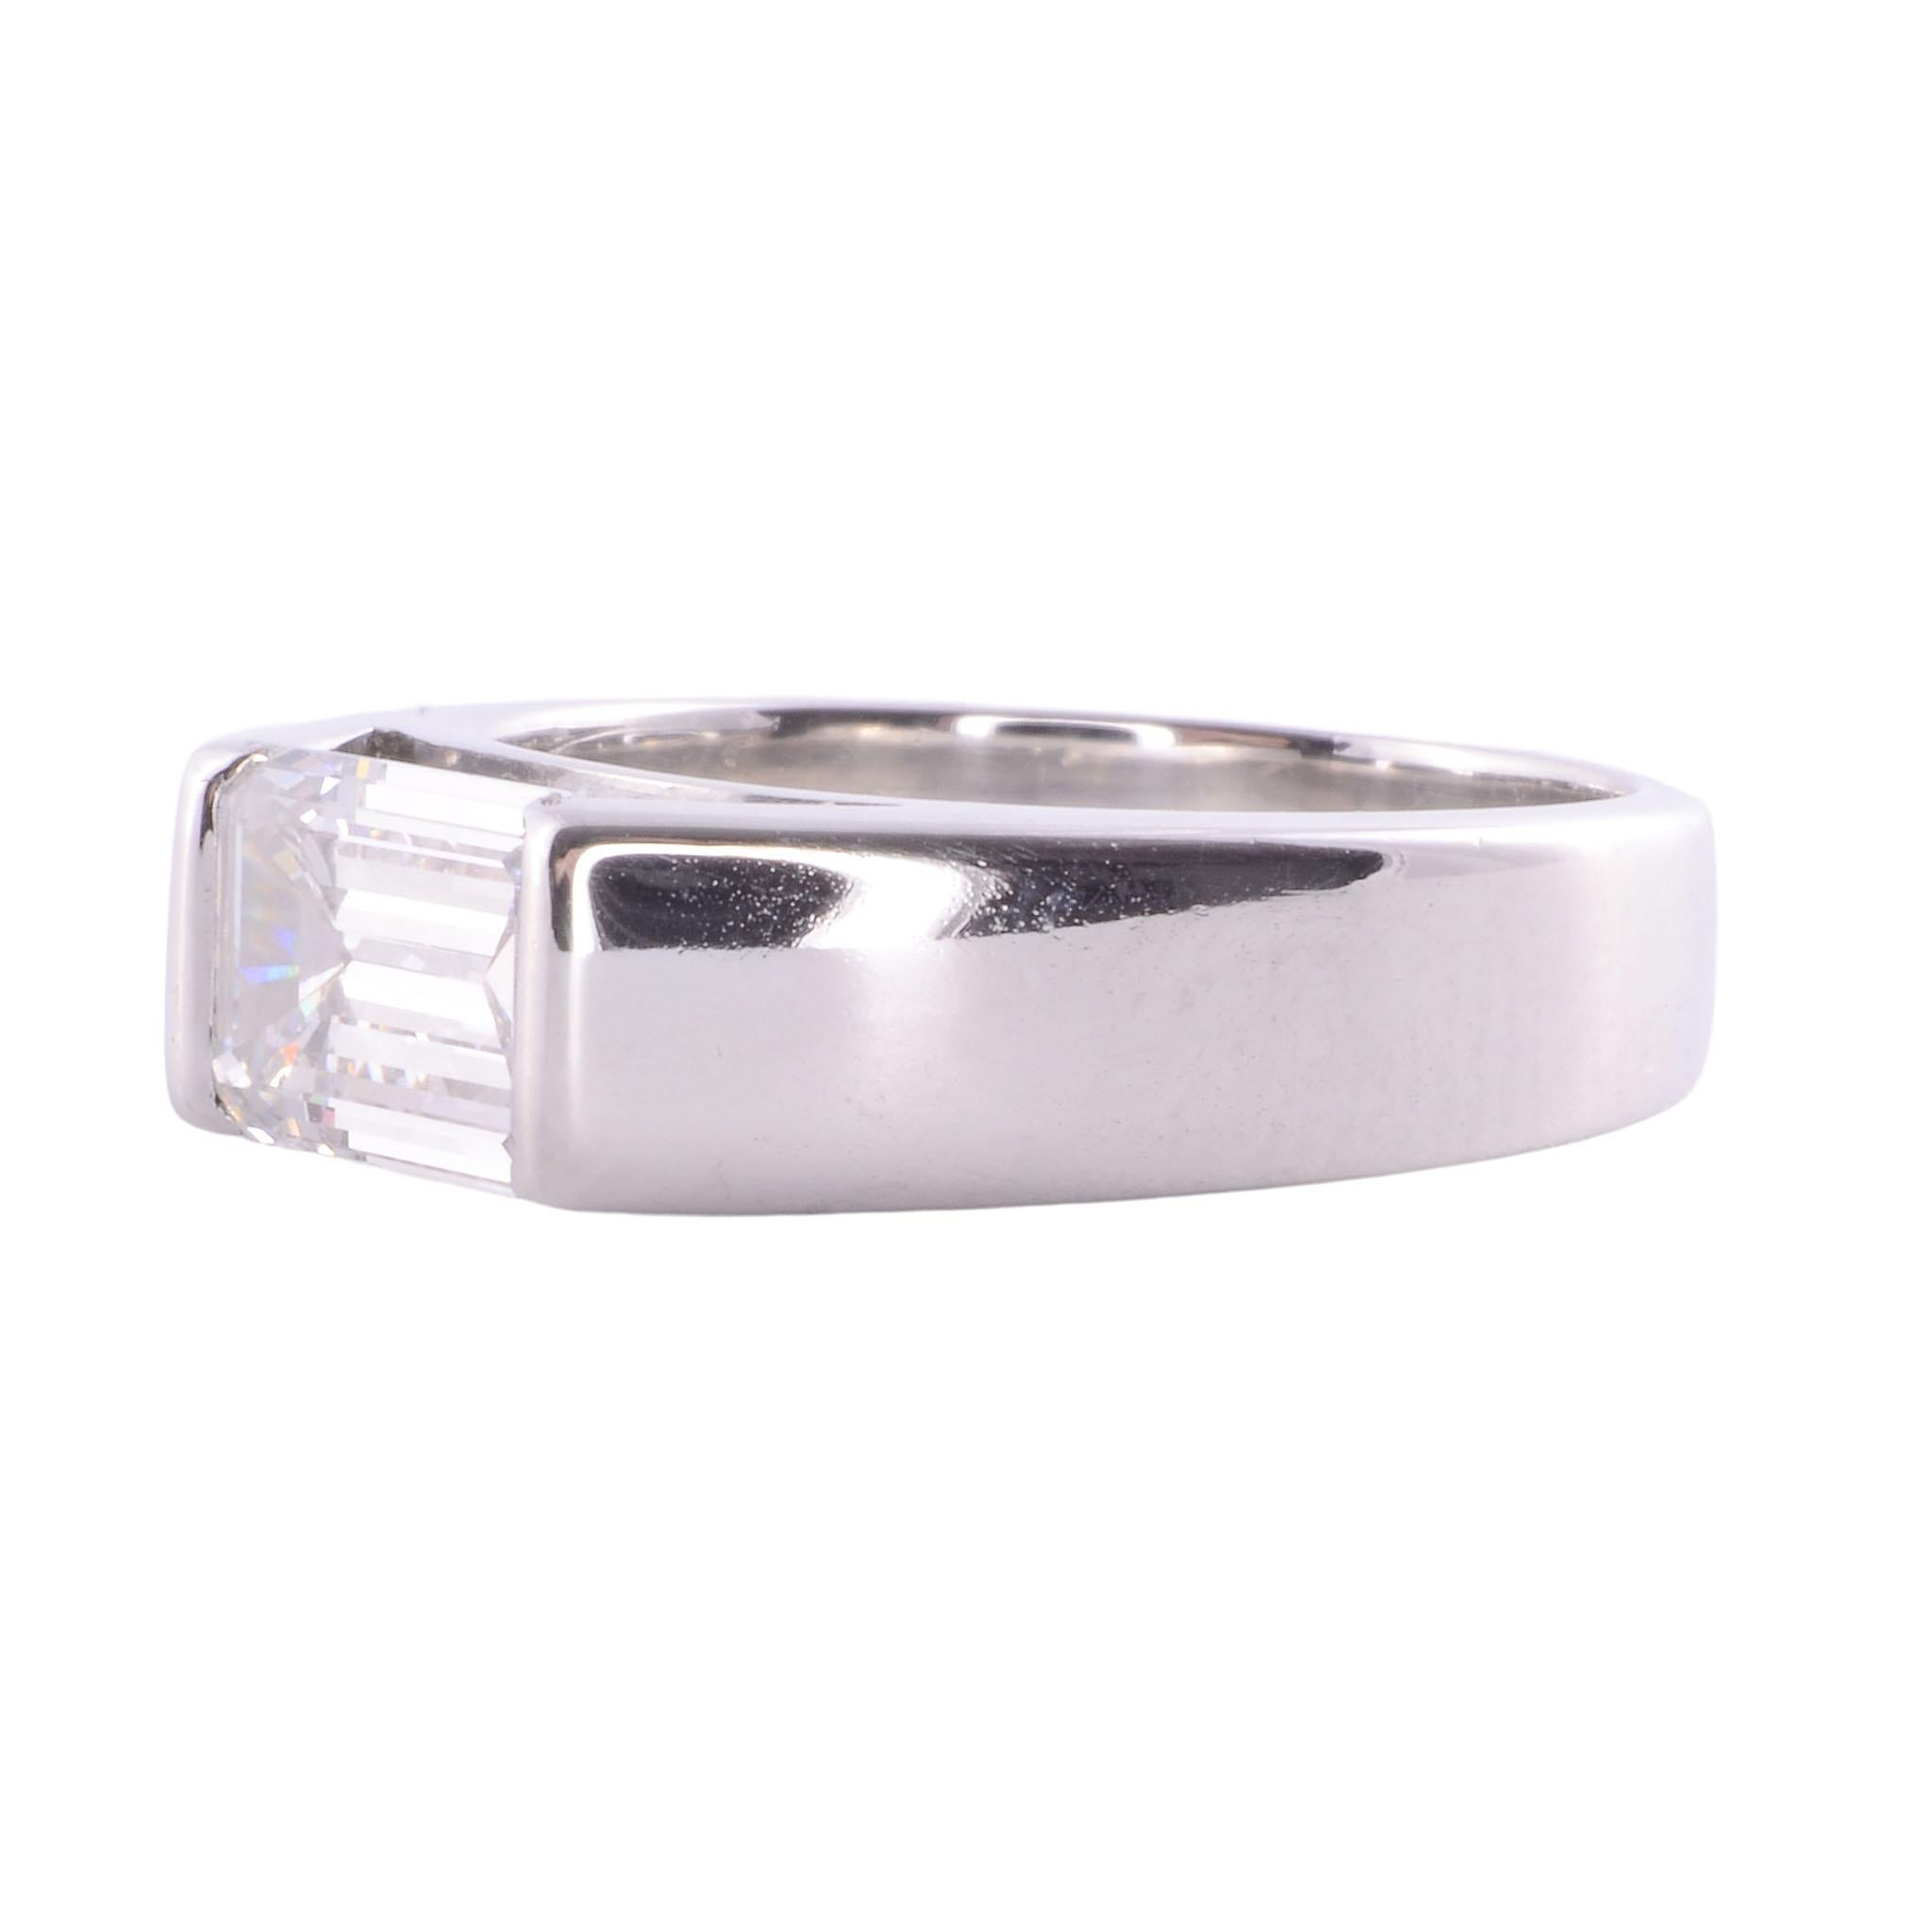 Estate 1.73 carat VVS2 emerald cut diamond platinum ring, circa 1990. This heavy platinum solitaire ring features a 1.73 carat emerald cut diamond. The diamond boasts VVS2 clarity and F color. This exquisite solitaire diamond ring is appraised at